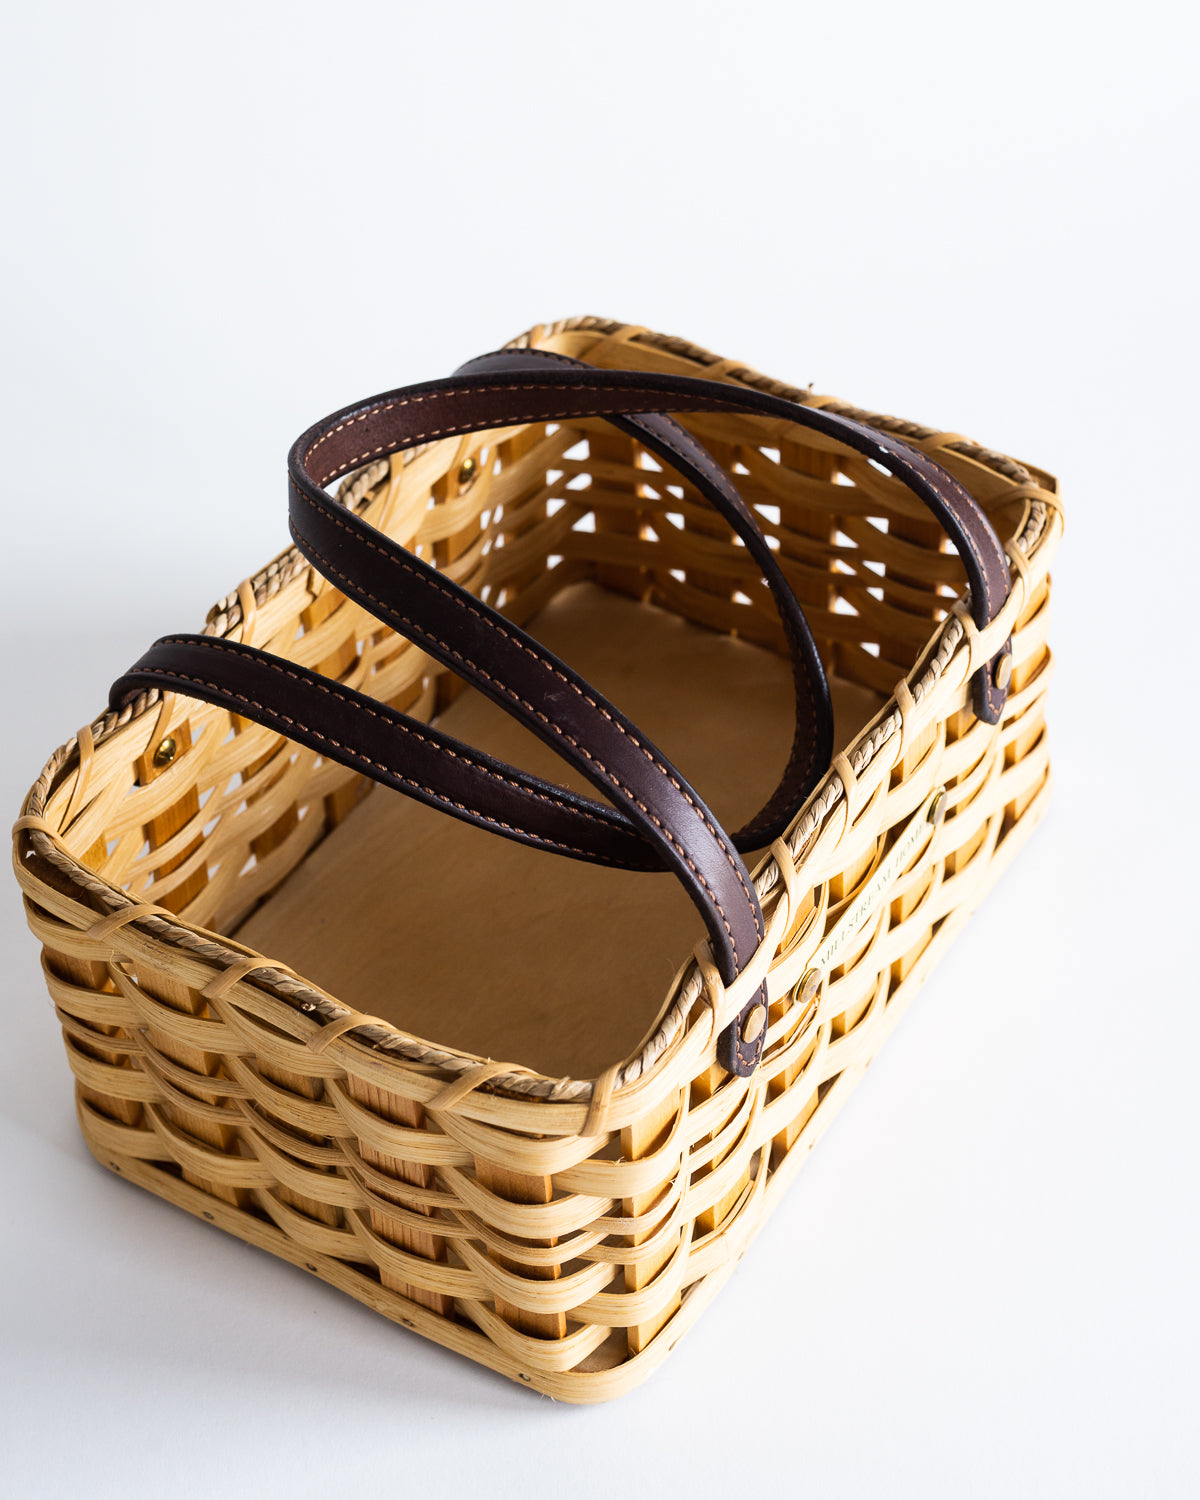 The Petite Gathering Basket